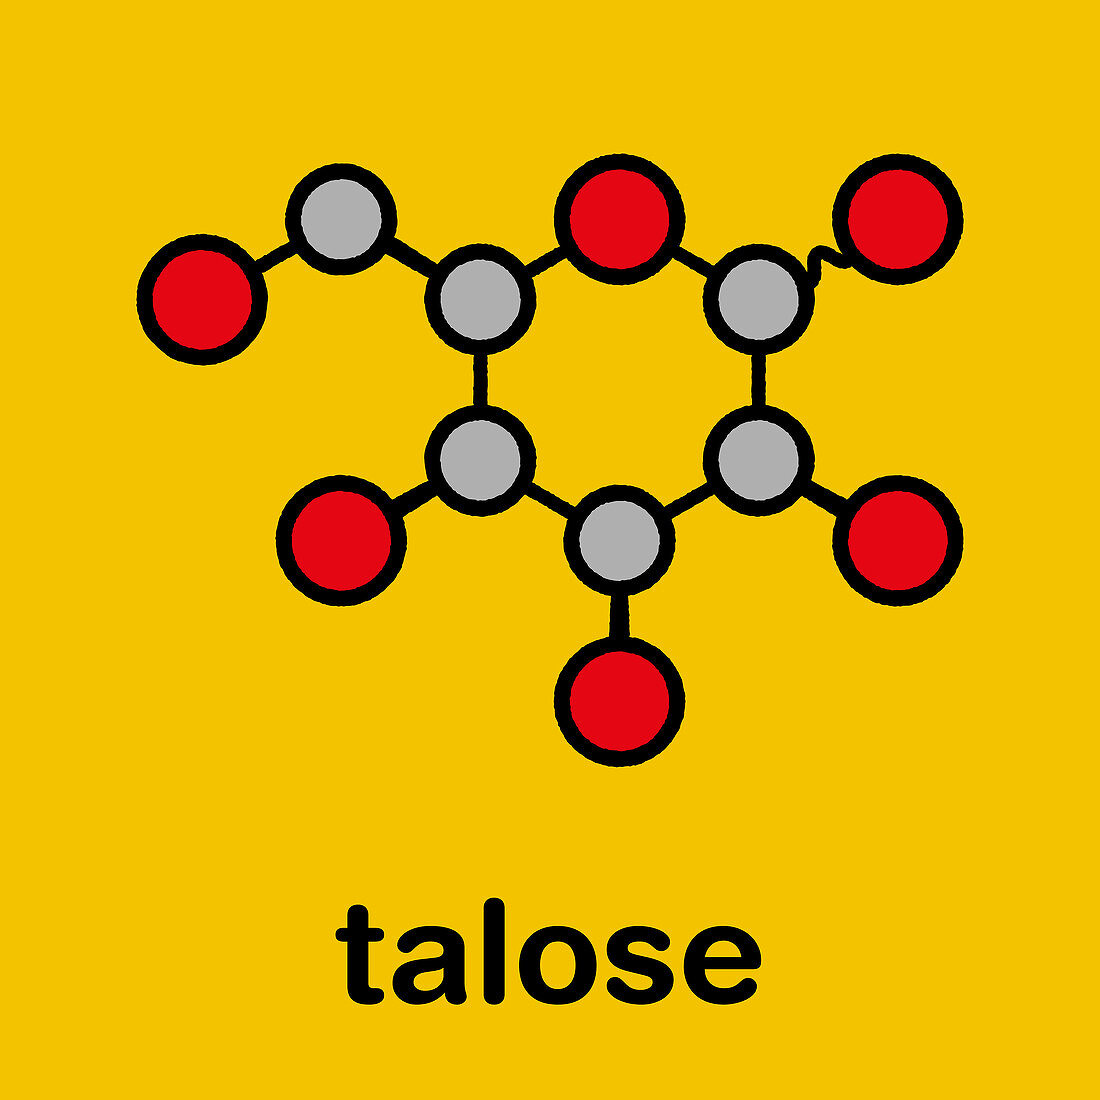 Talose sugar molecule, illustration